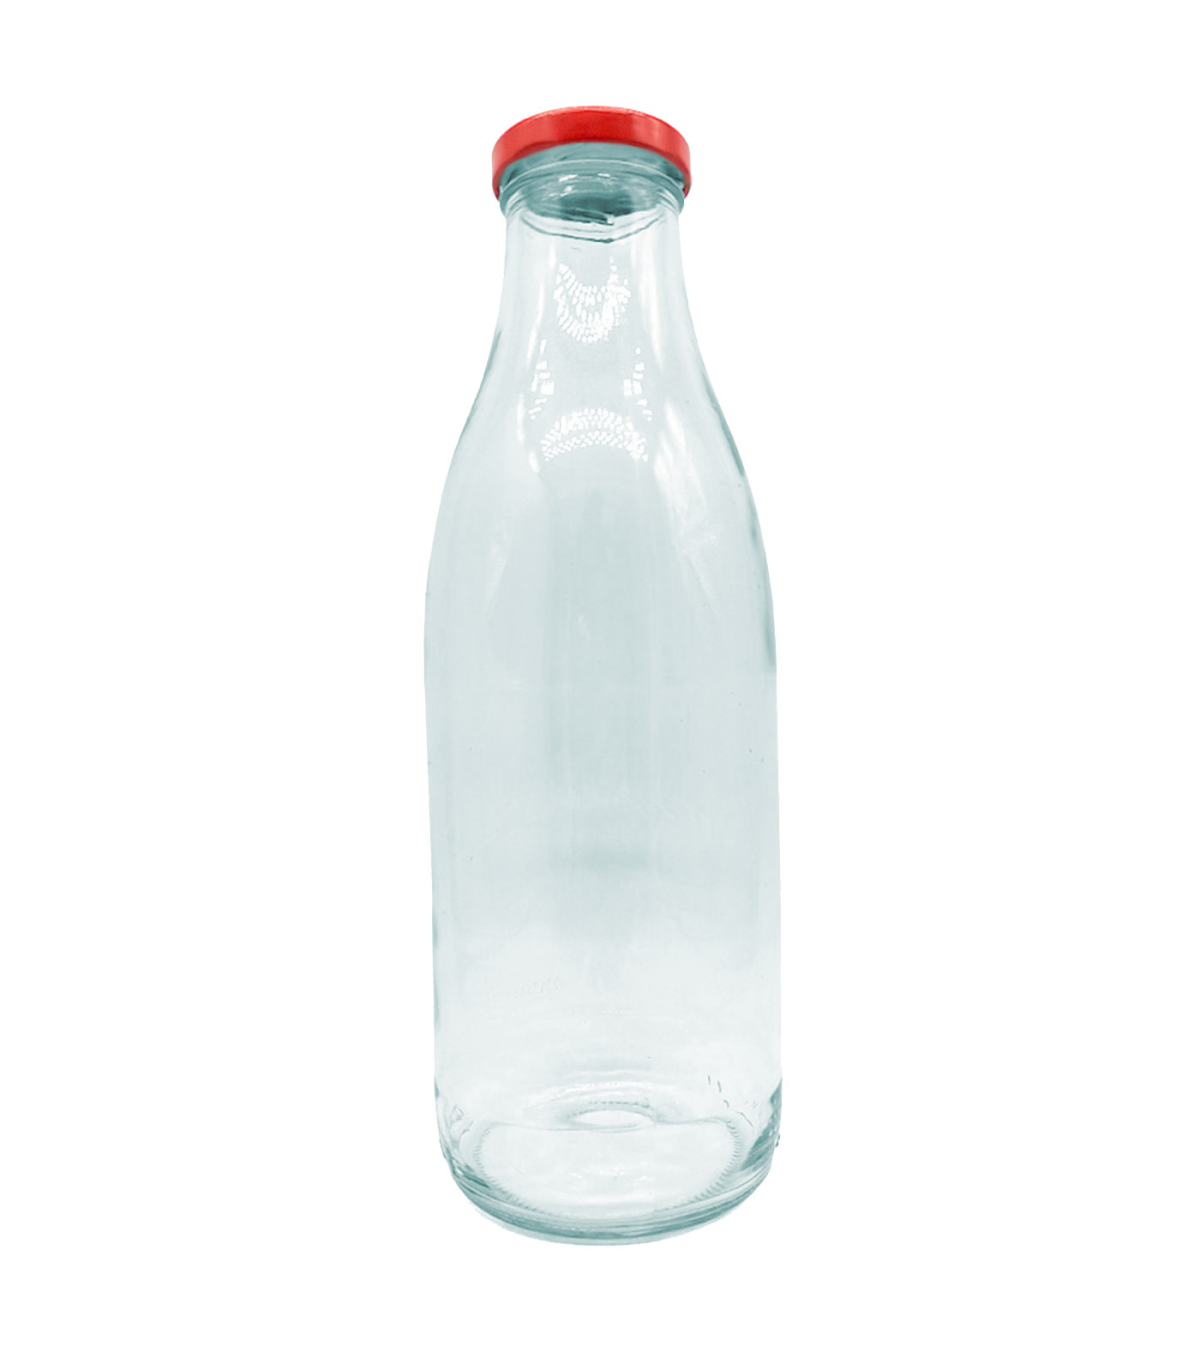 Botella De Vidrio De 1 Litro Con Tapa A Rosca